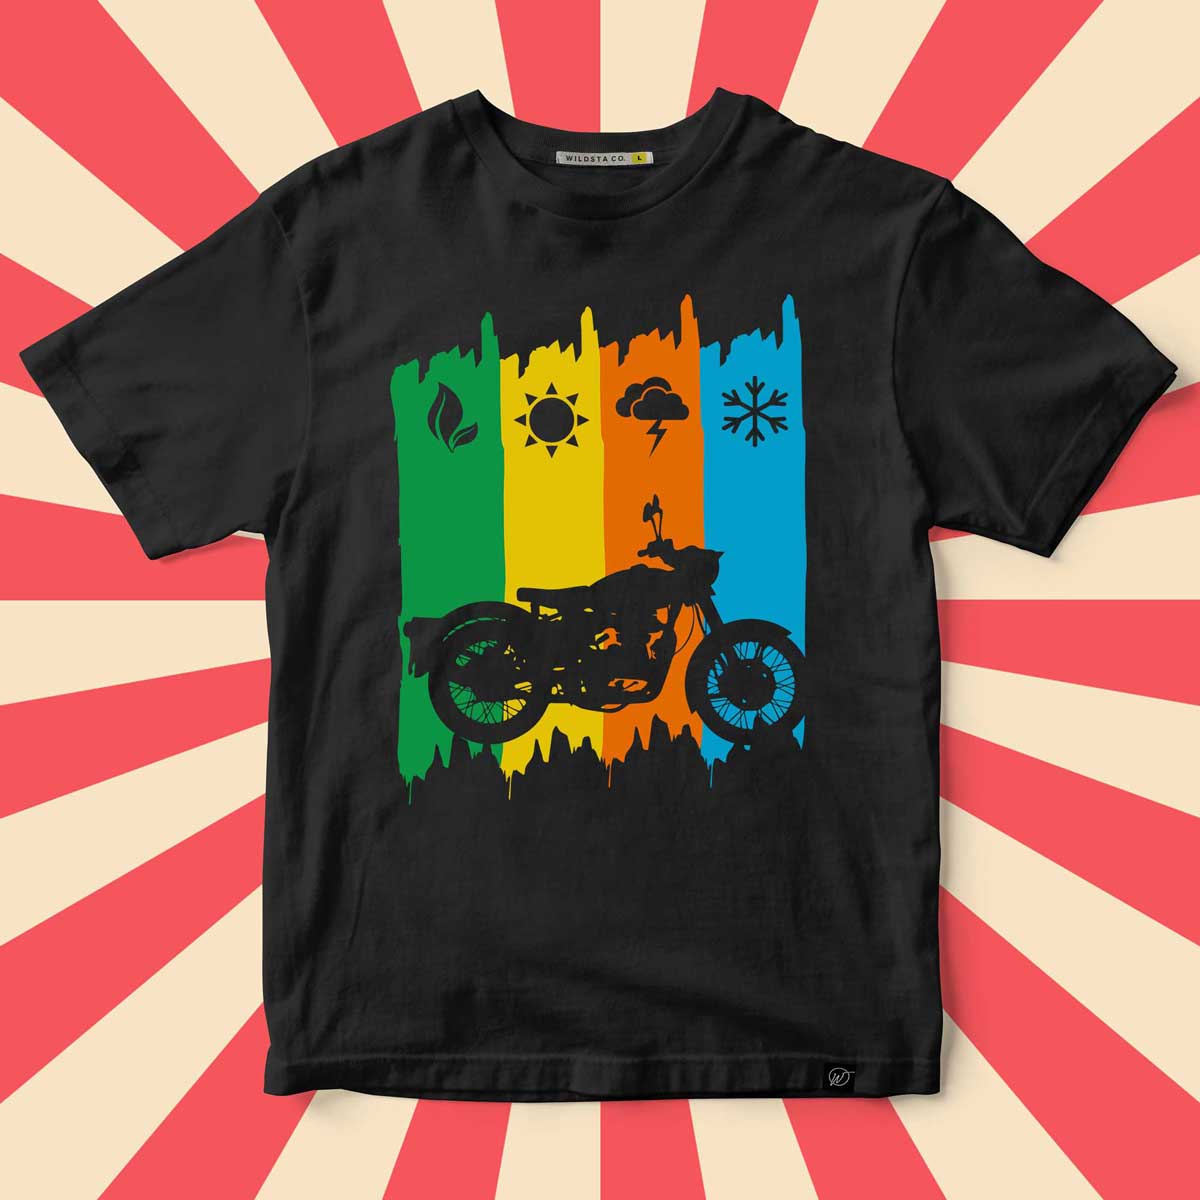 RE Bullet ladakh Addition T-Shirt - Wildsta India